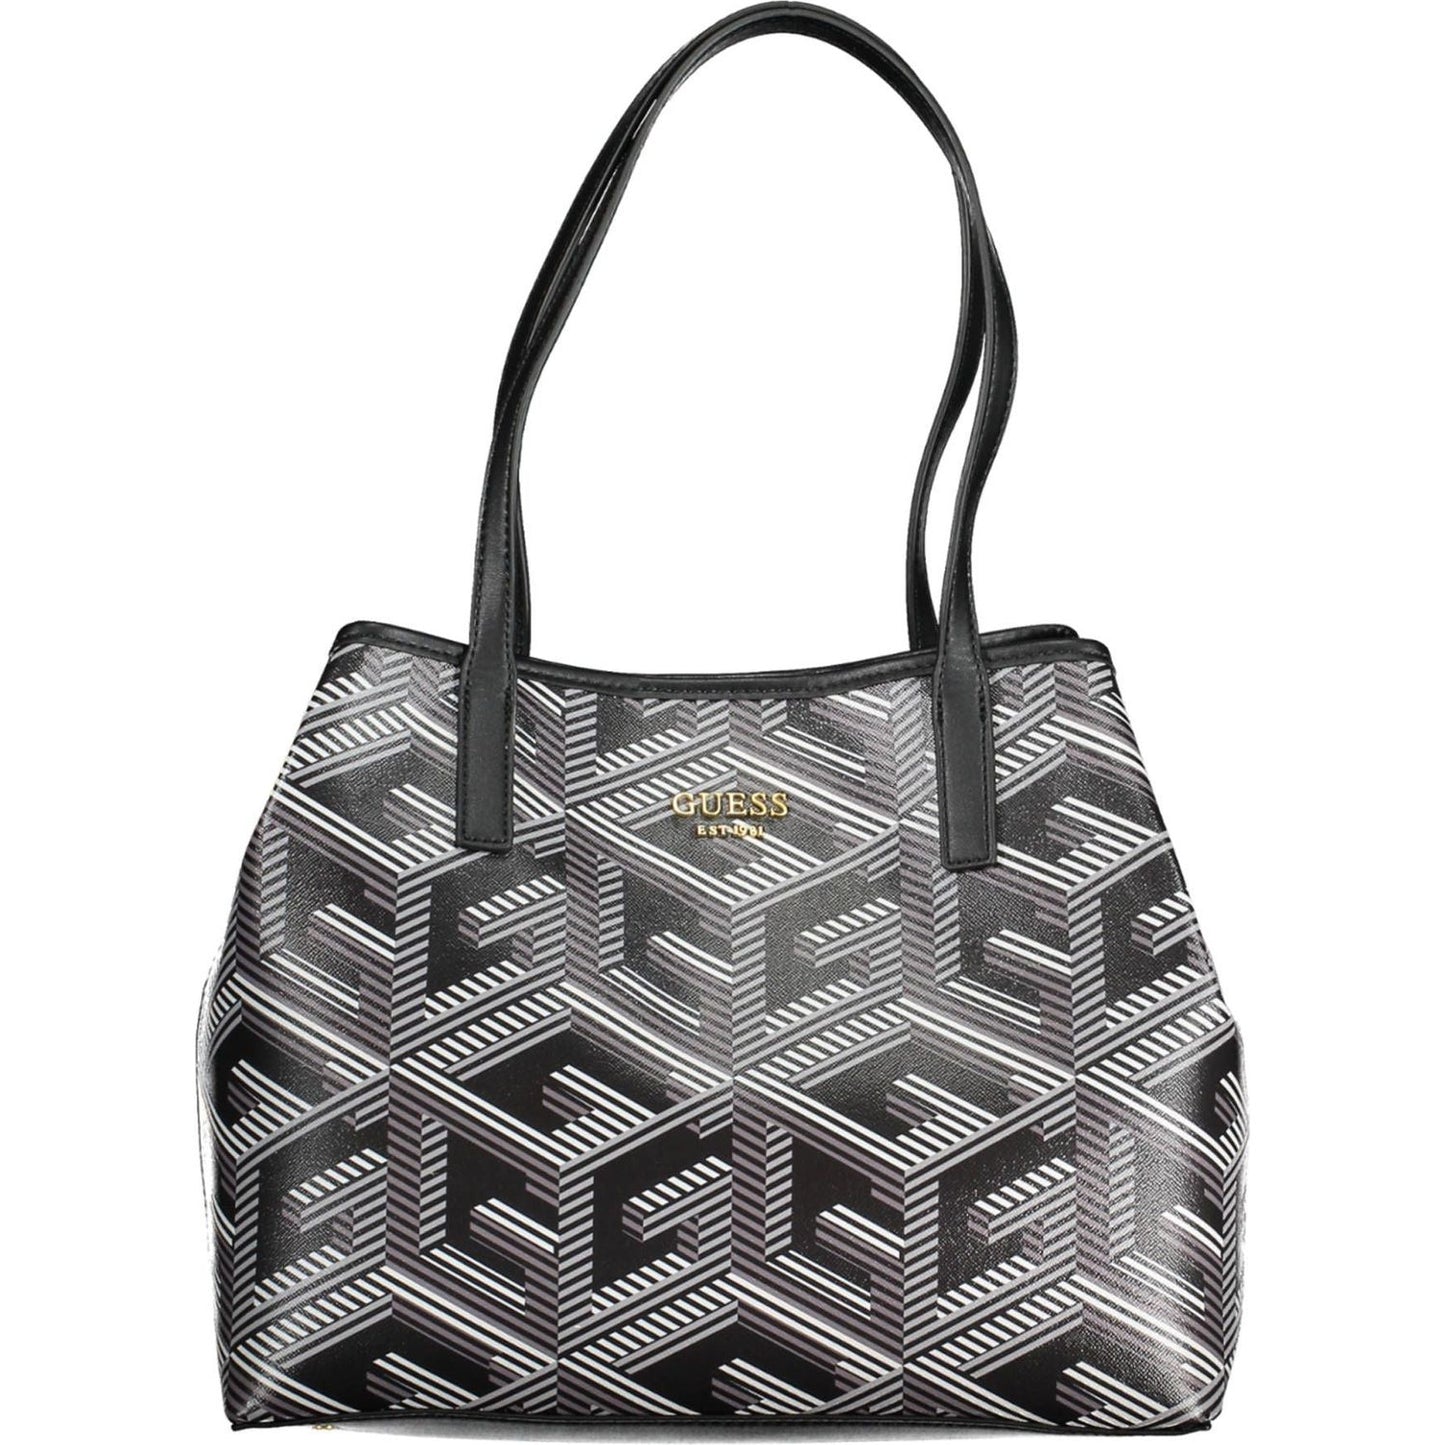 Guess JeansChic Convertible Black Handbag with PochetteMcRichard Designer Brands£179.00